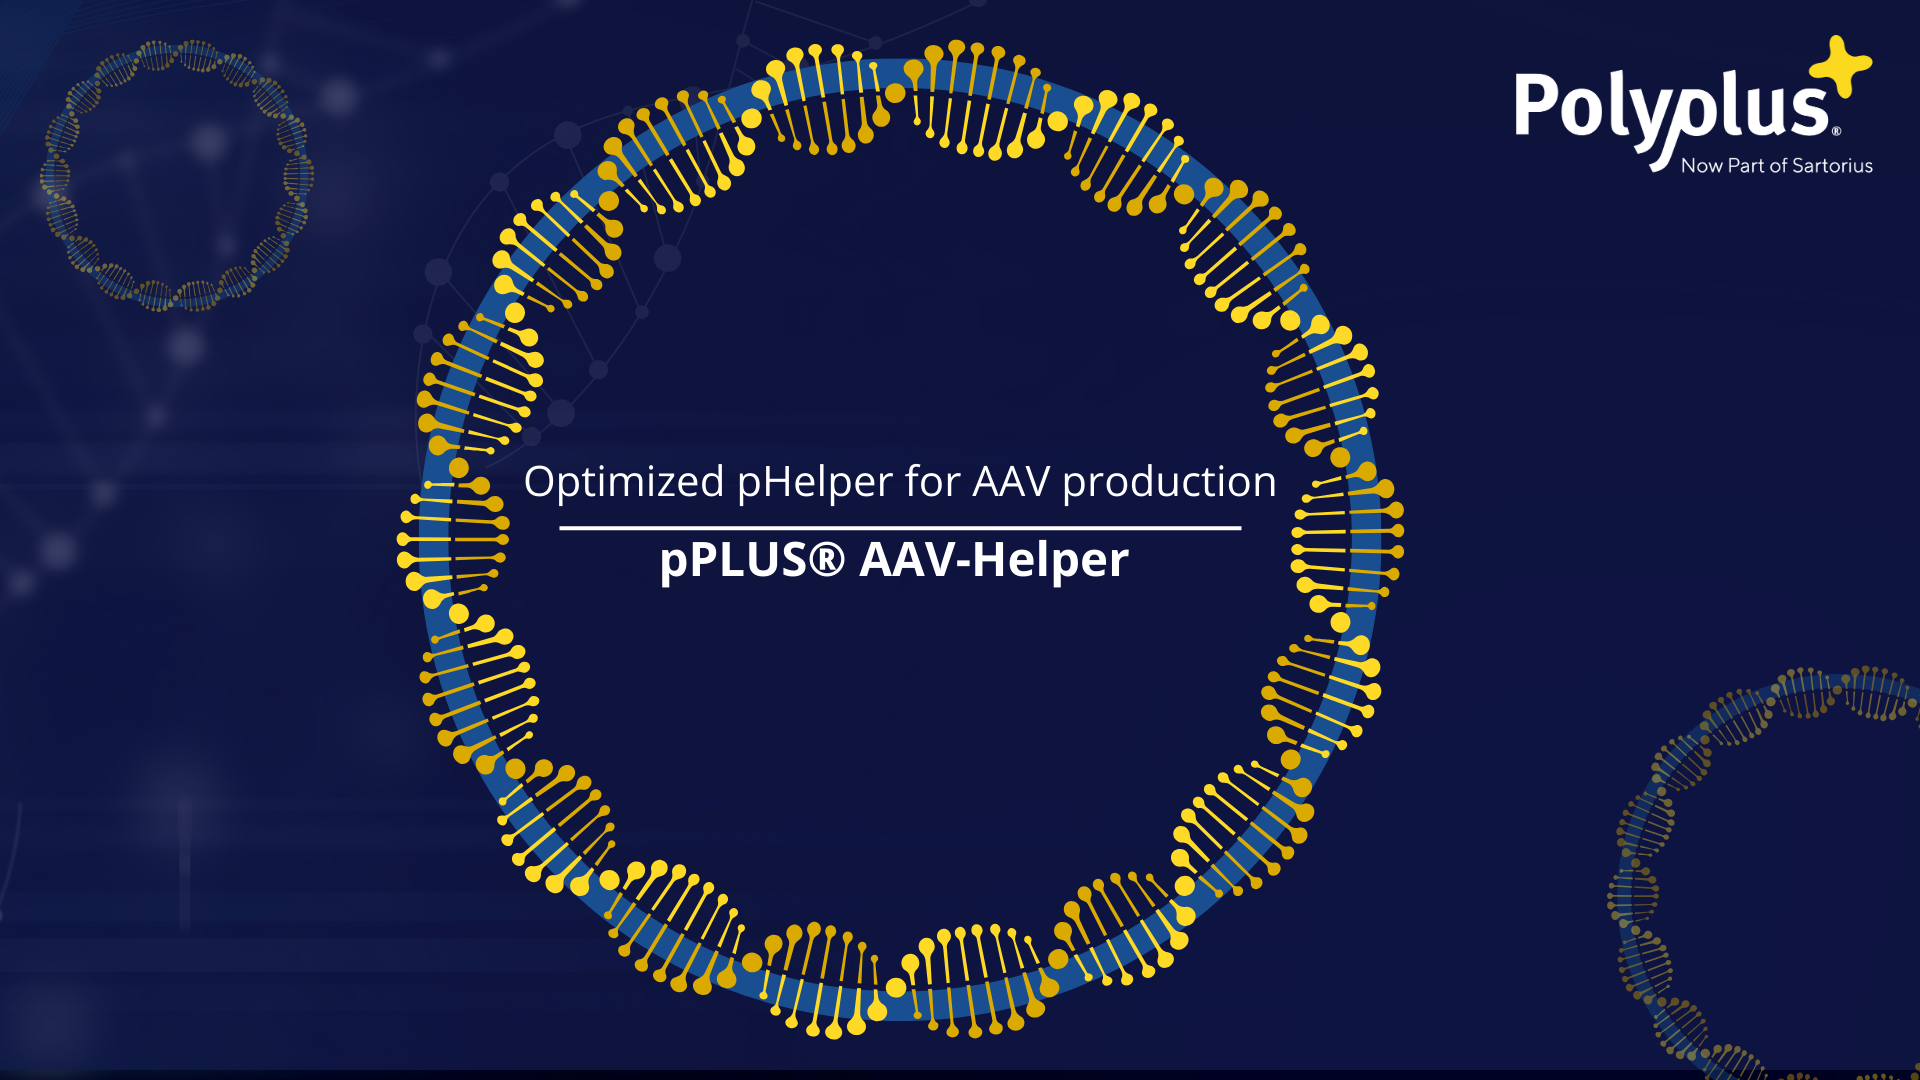 Polyplus Launches Off-the-Shelf pPLUS® AAV-Helper Plasmid for enhanced AAV Production